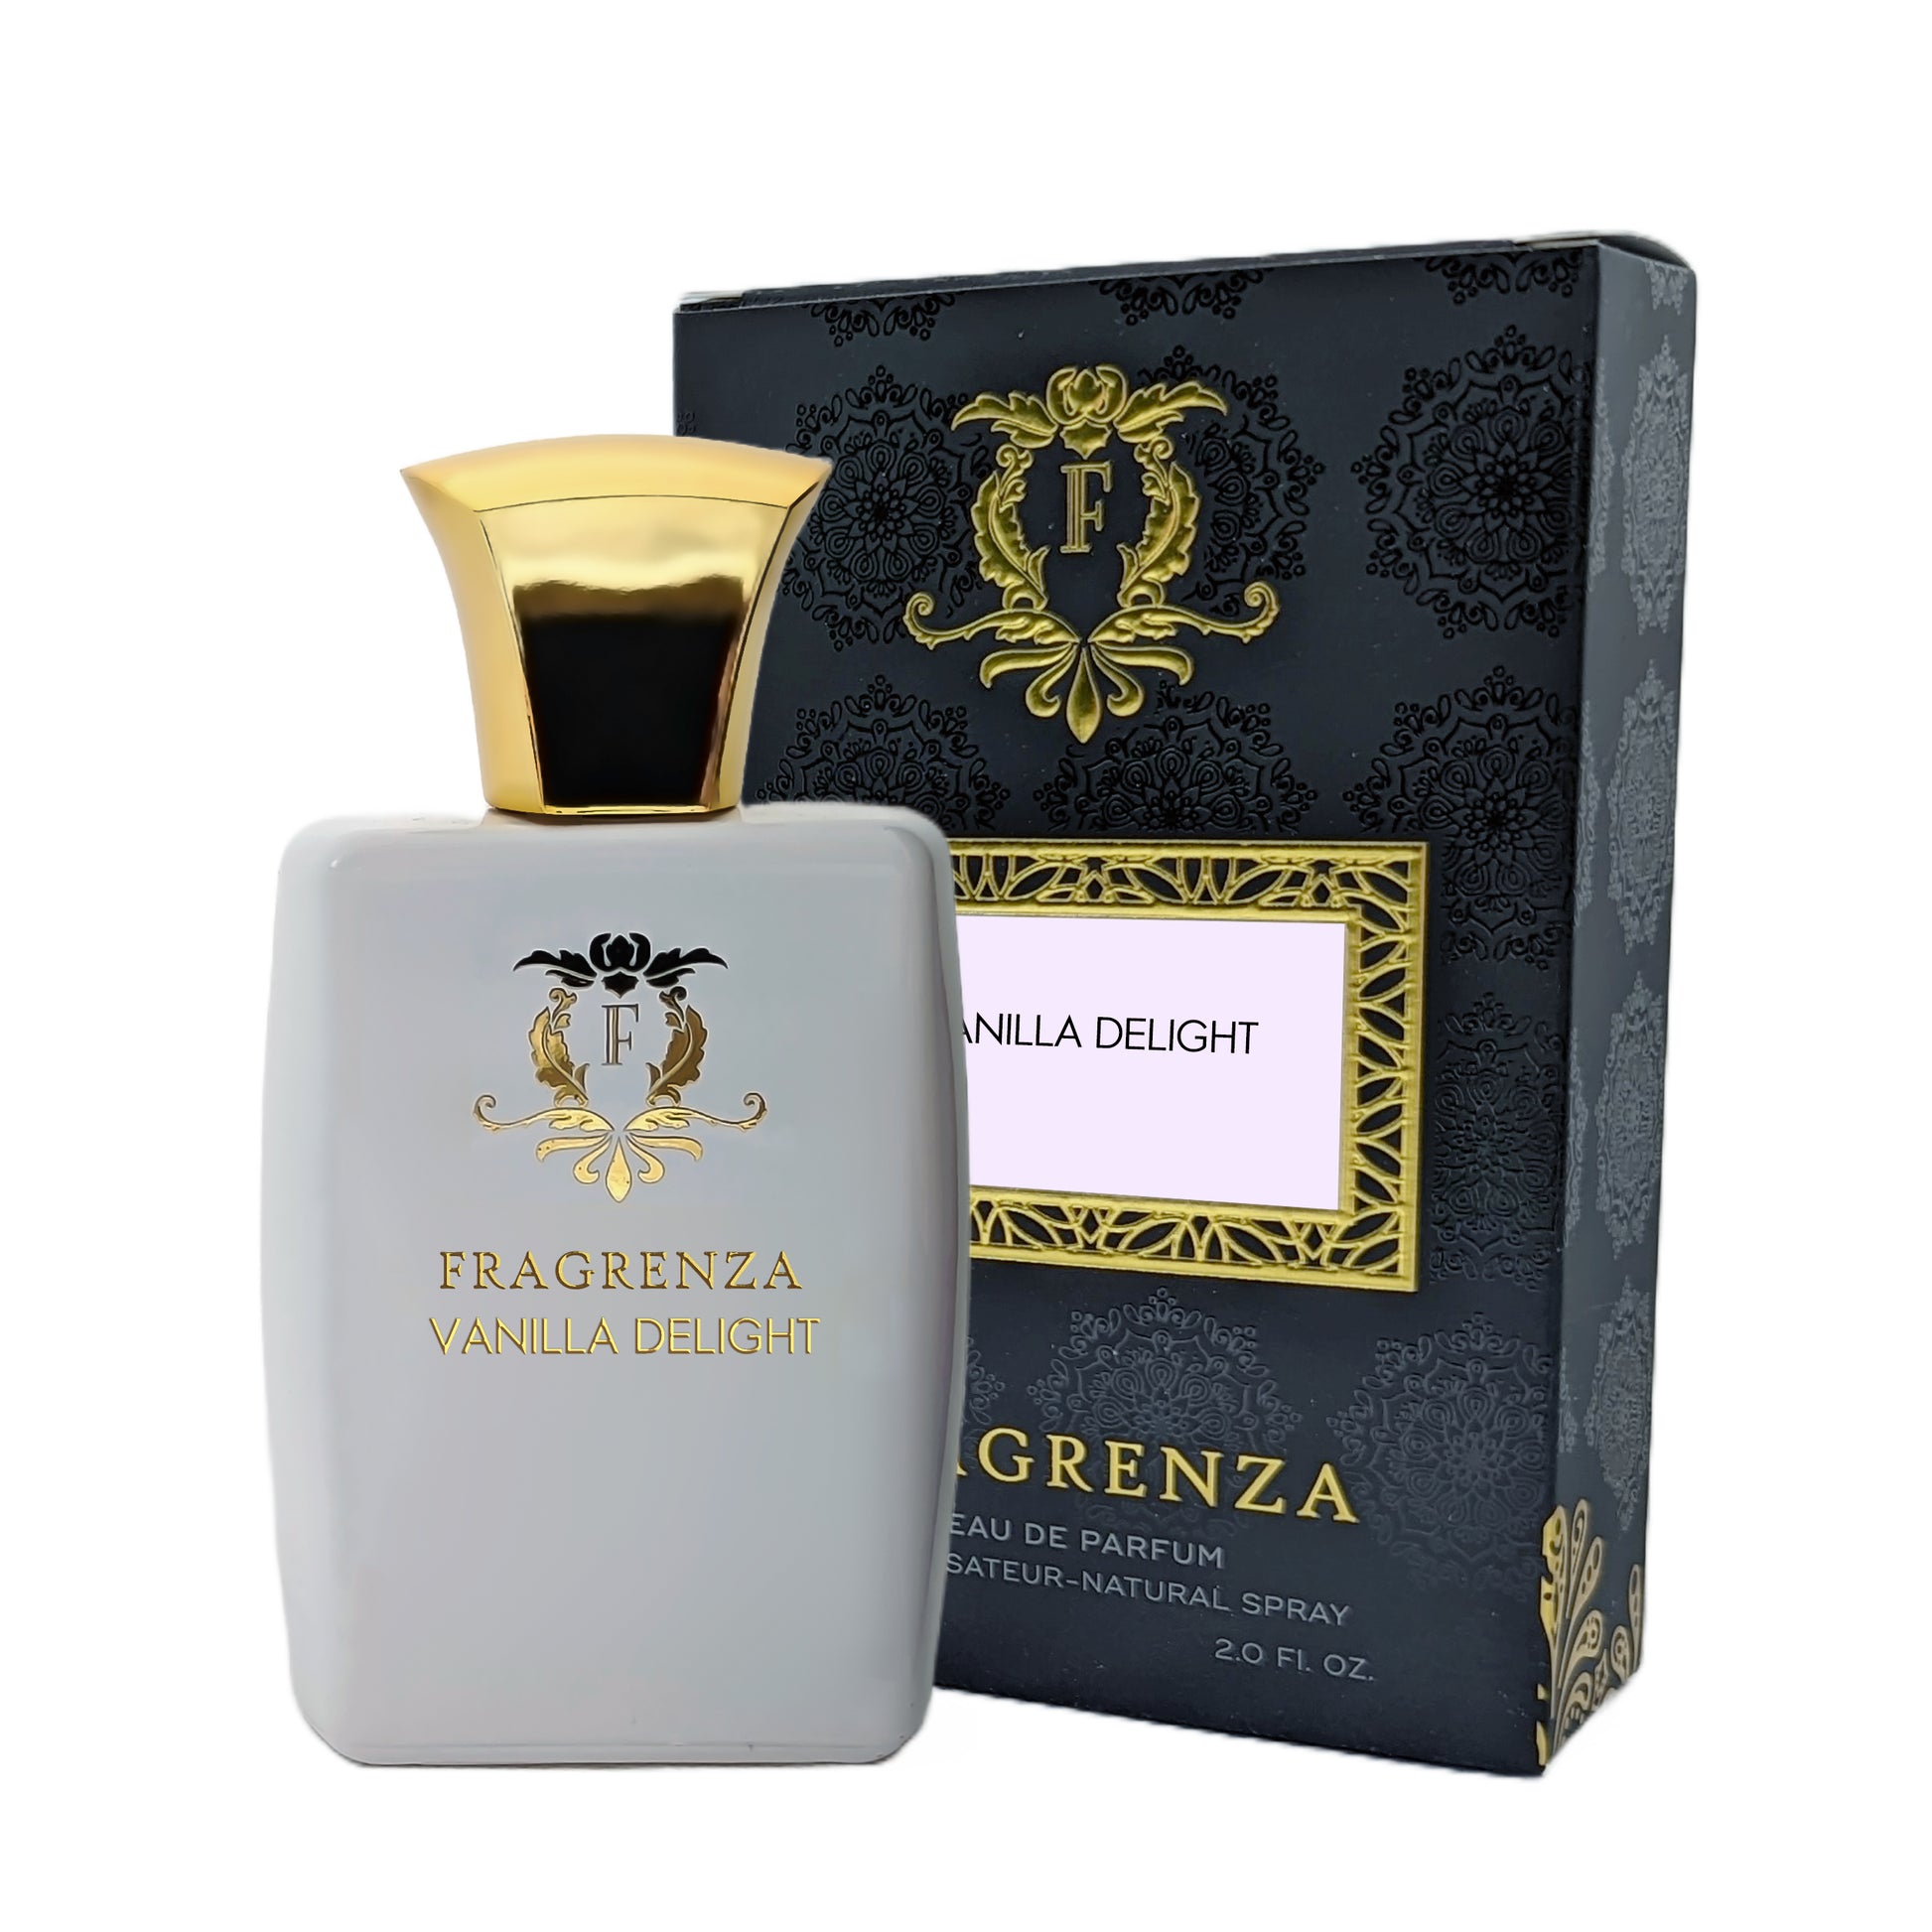 Shop Suede Vanilla Parfum d'Interieur Online